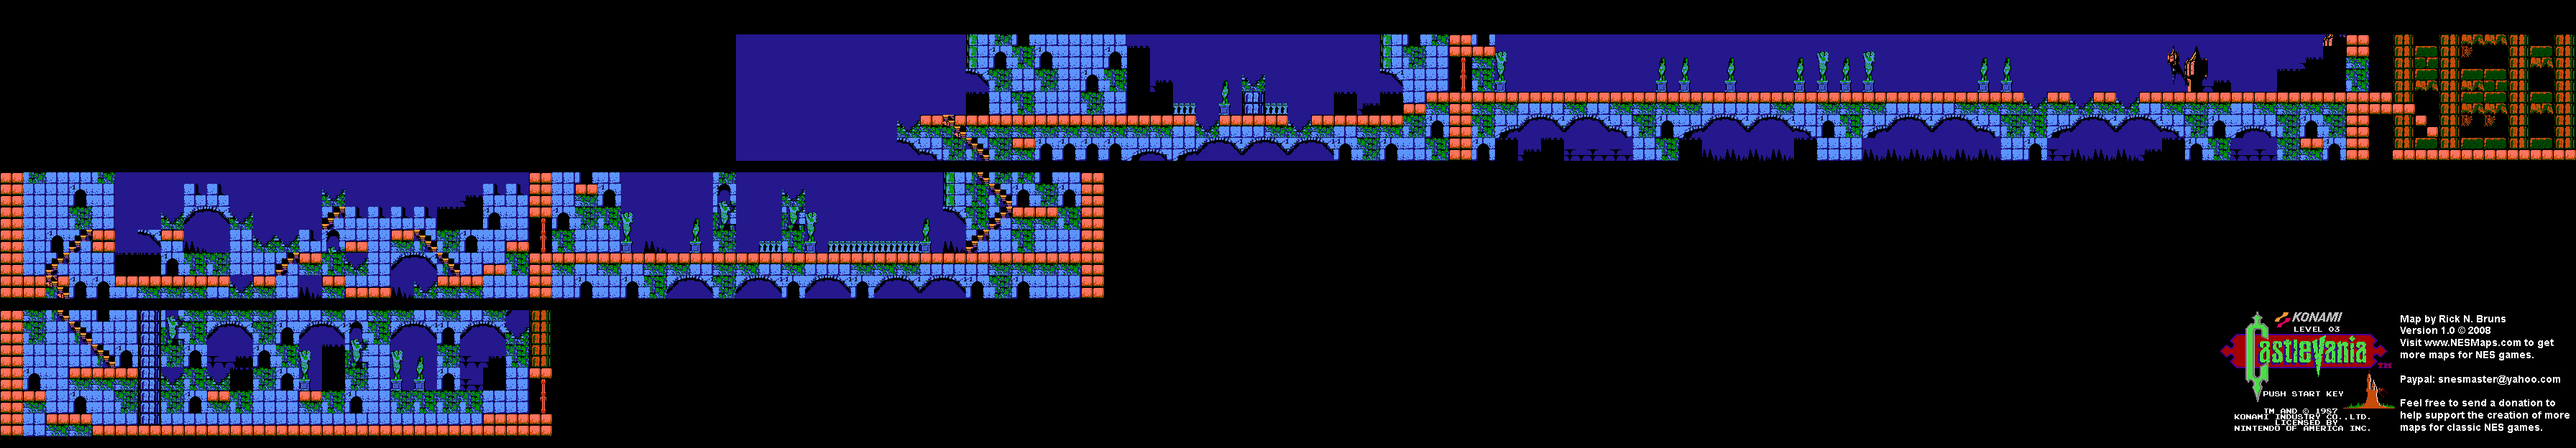 Castlevania - Level 3 Nintendo NES Background Only Map